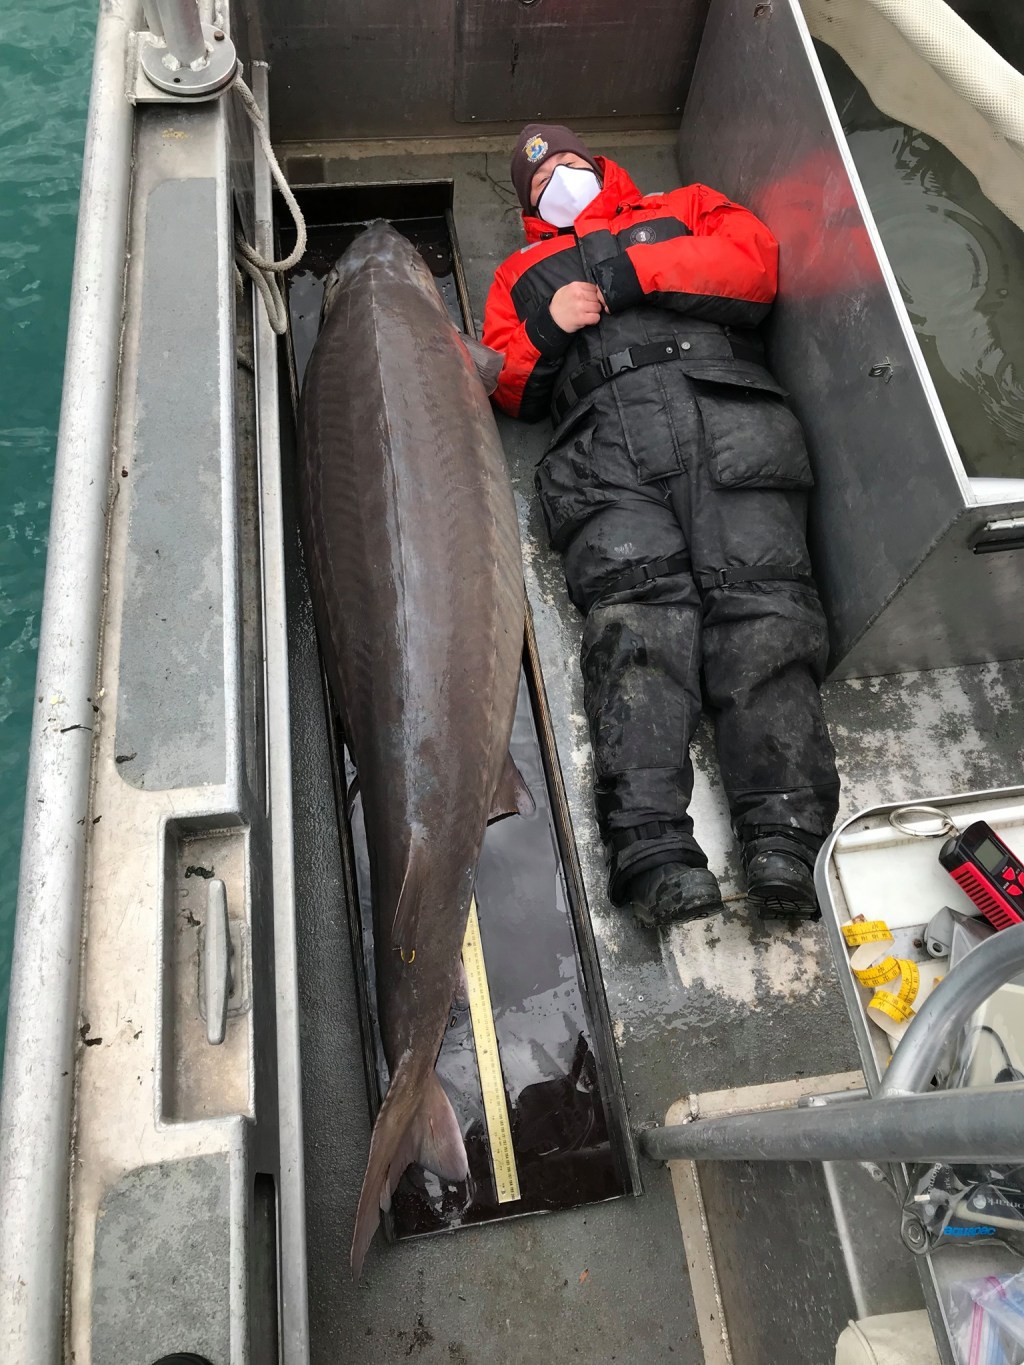 240-pound Lake Sturgeon Sea Monster